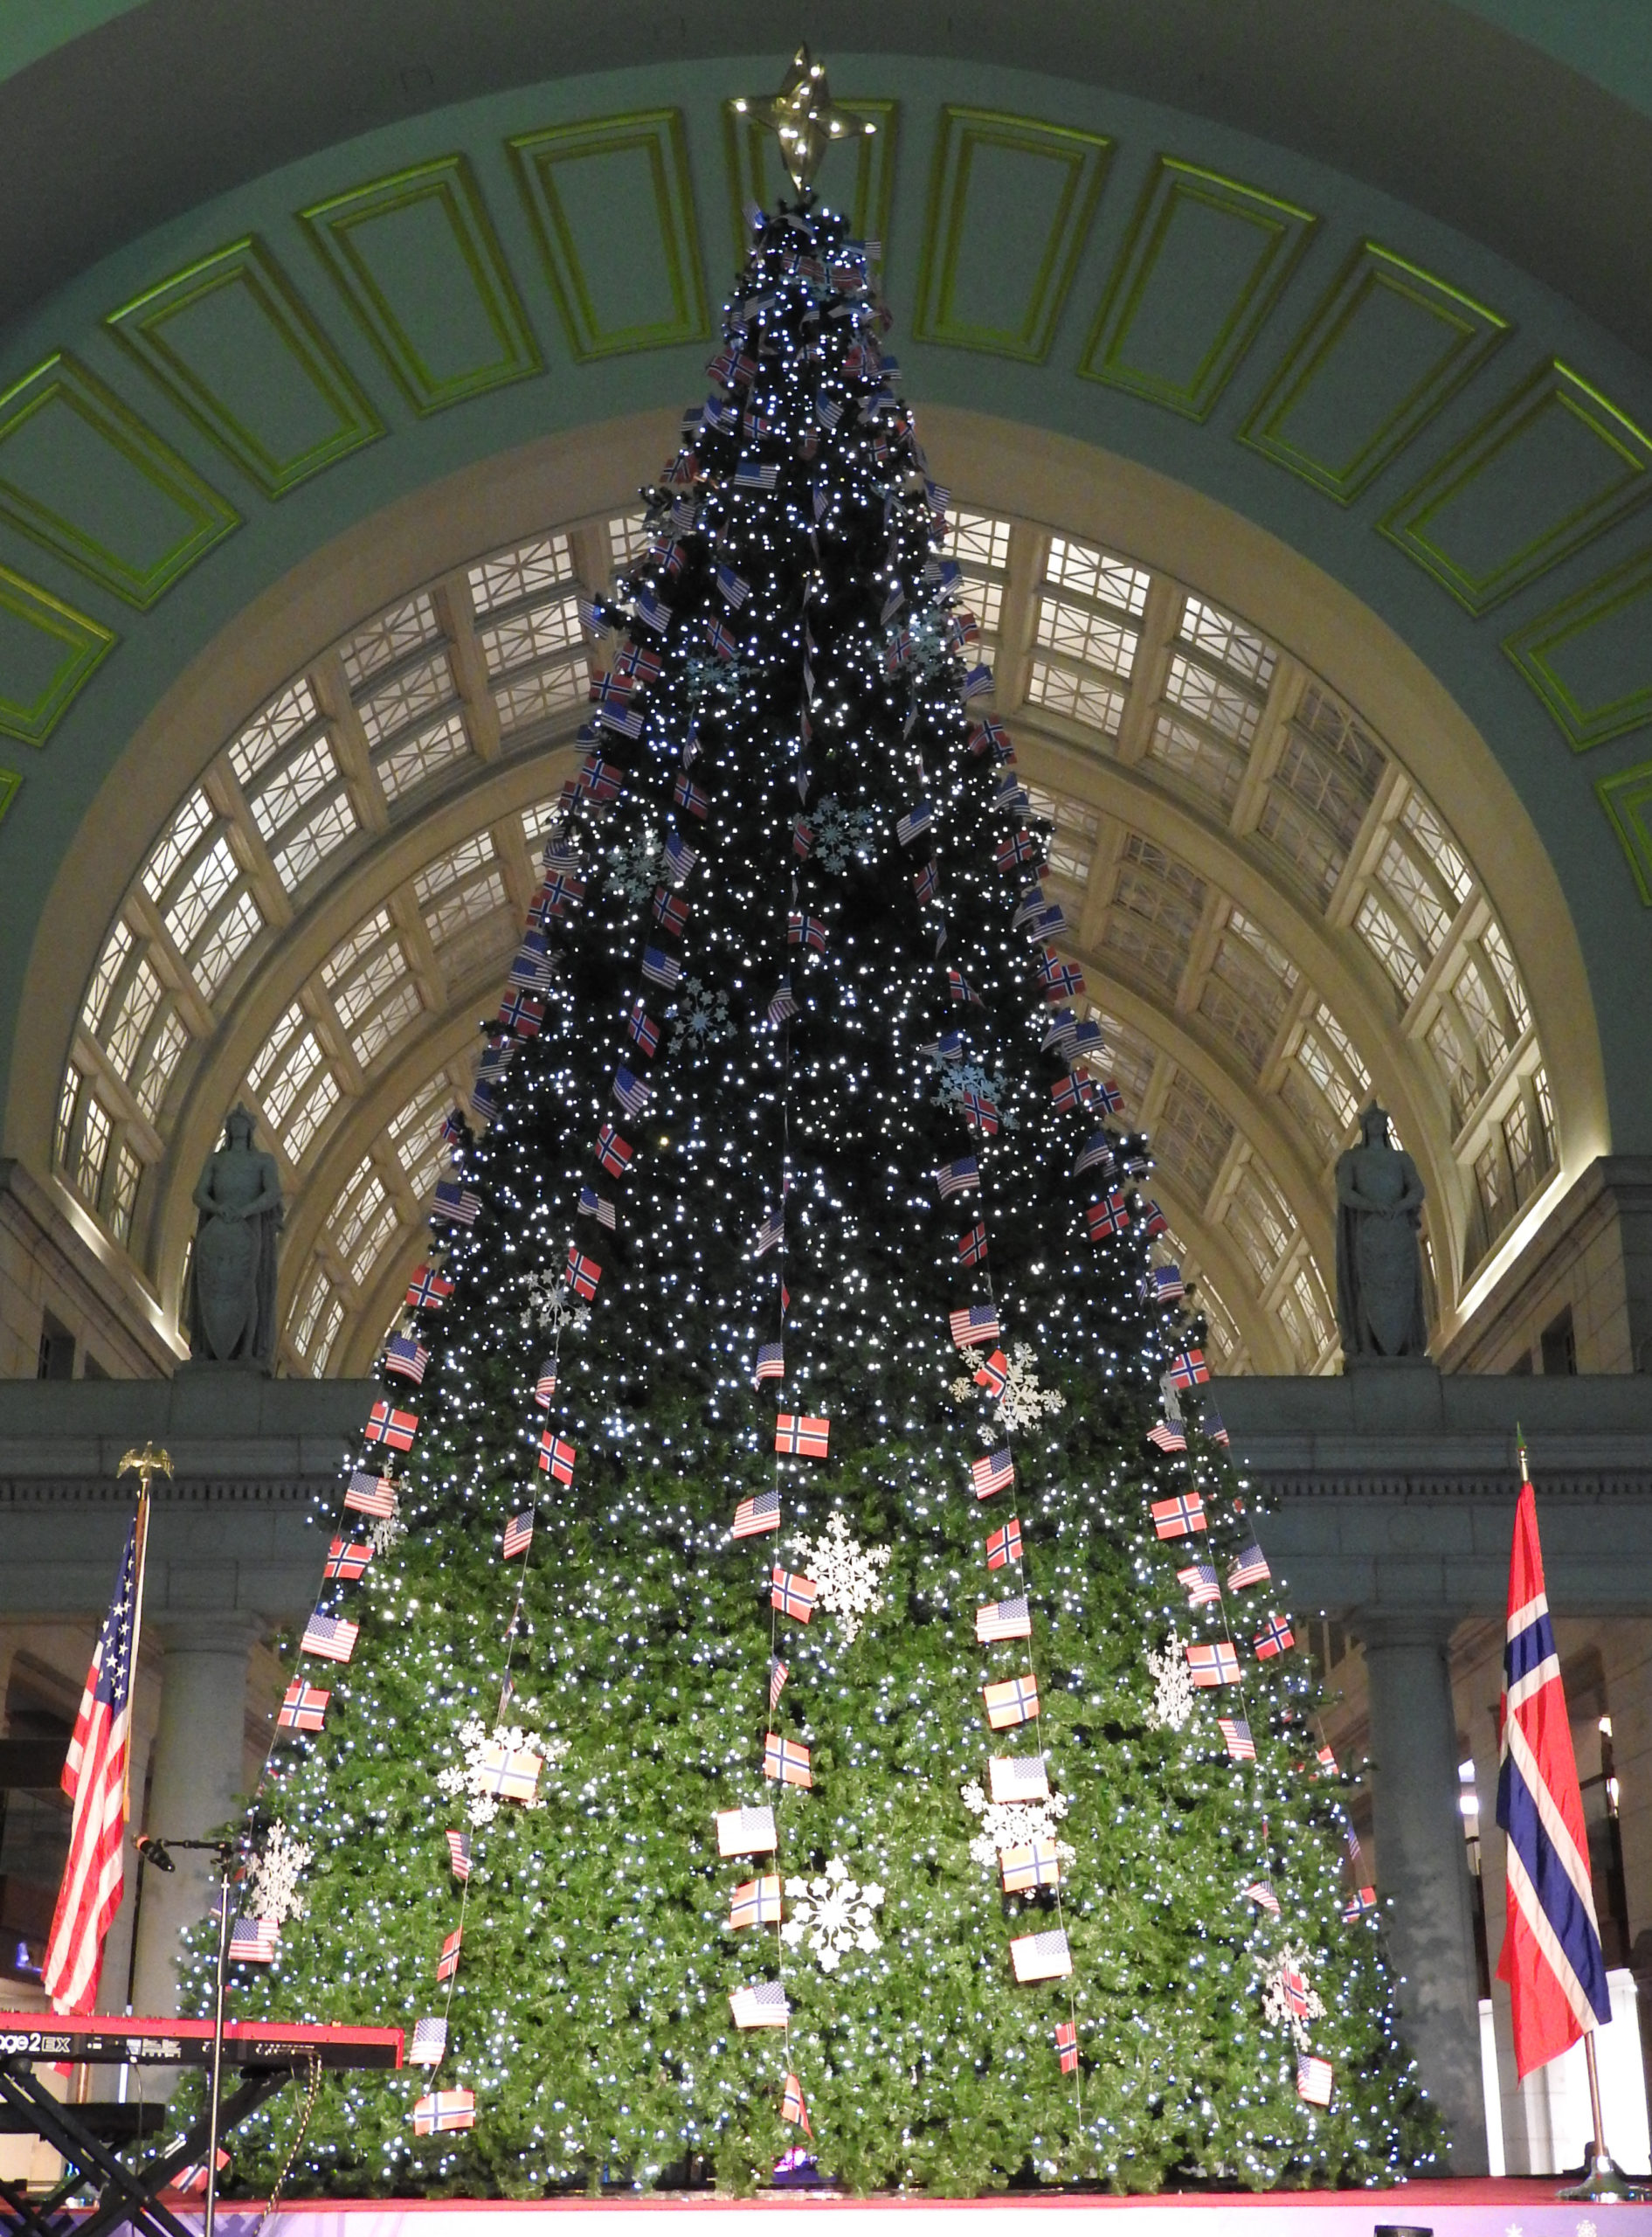 USRC » Another Wondrous Norwegian Holiday Tree Lighting Ceremony at